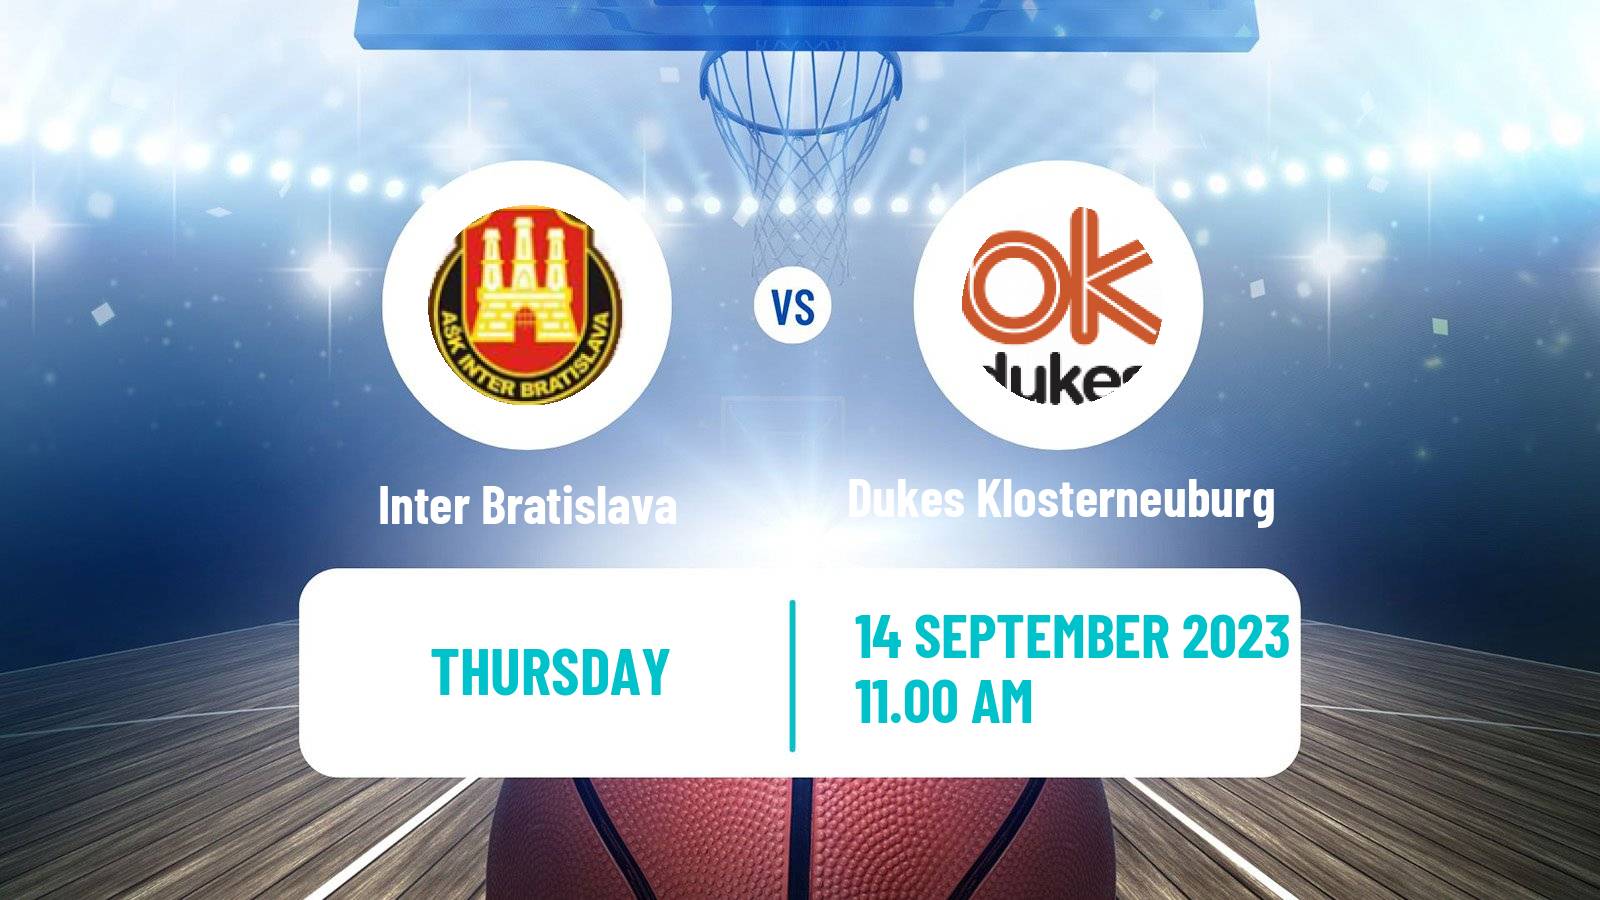 Basketball Club Friendly Basketball Inter Bratislava - Dukes Klosterneuburg